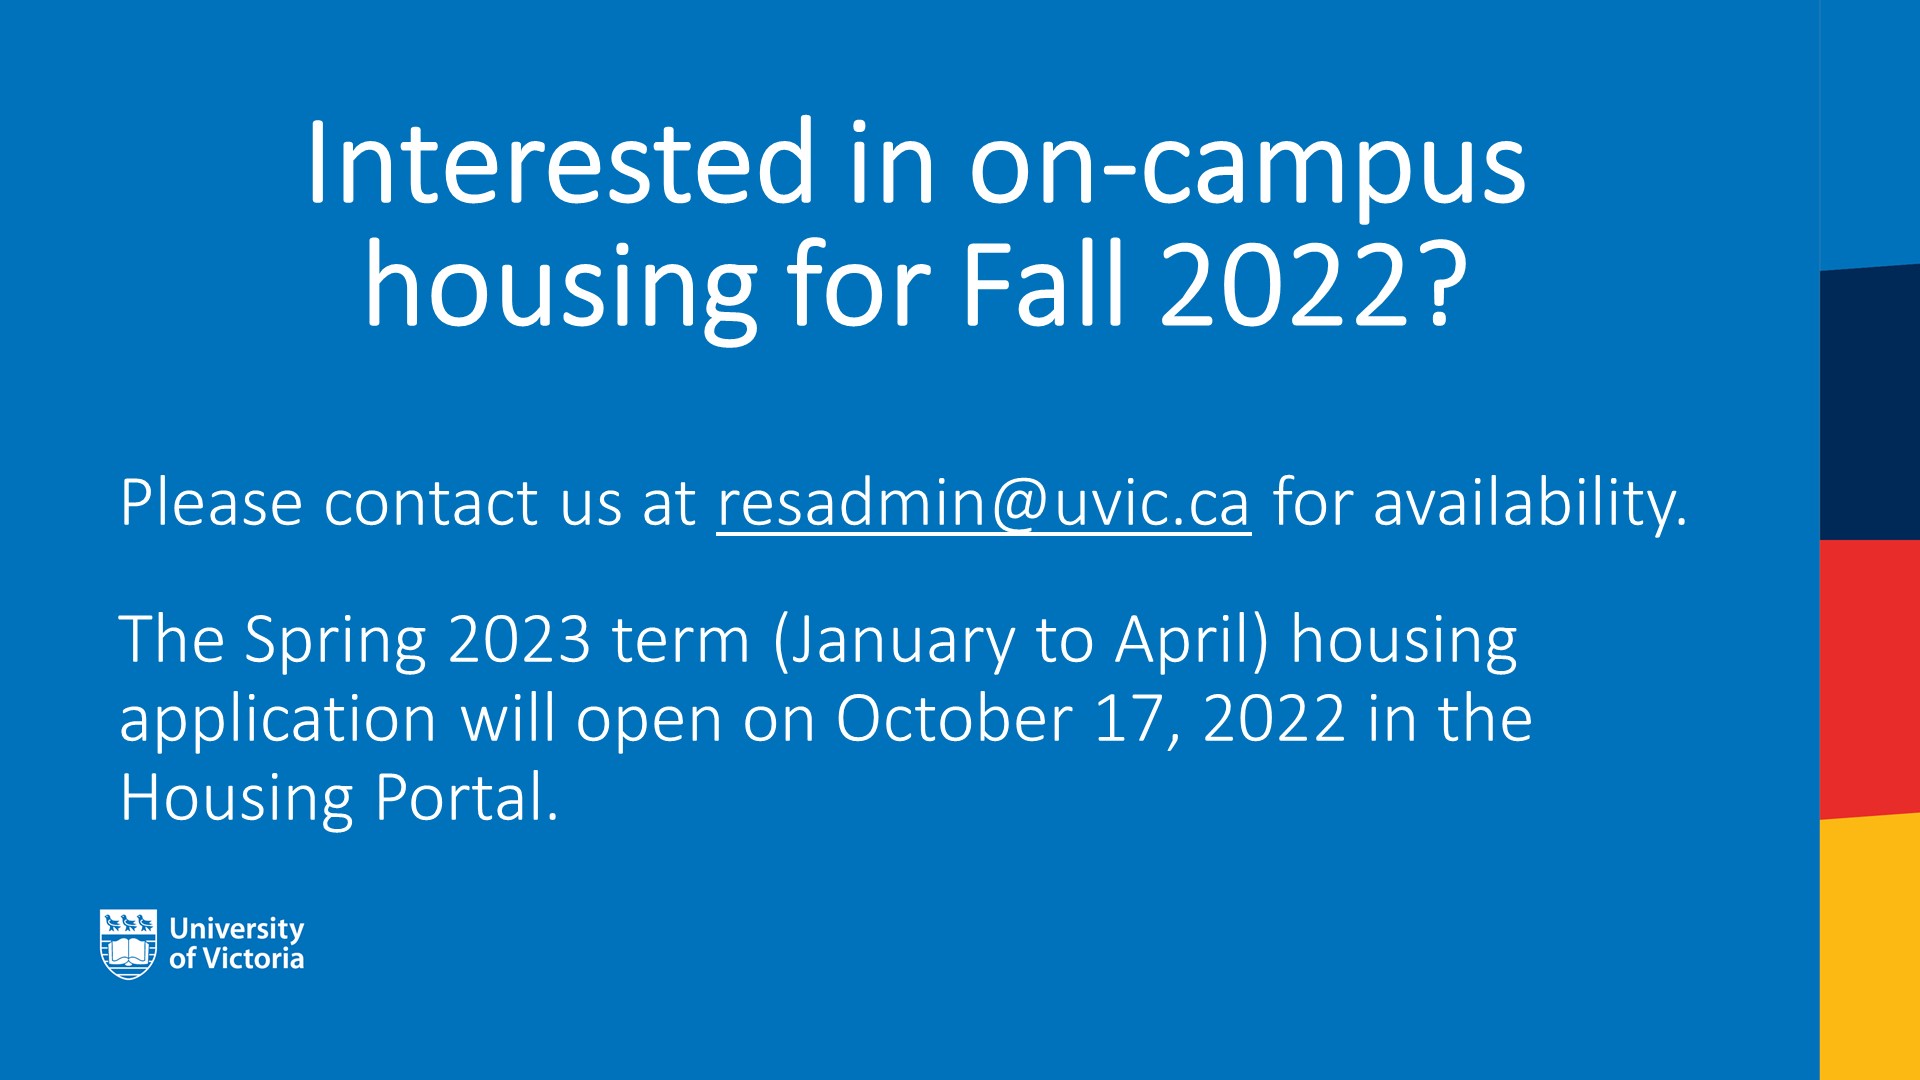 Vacancies for fall 2022 housing